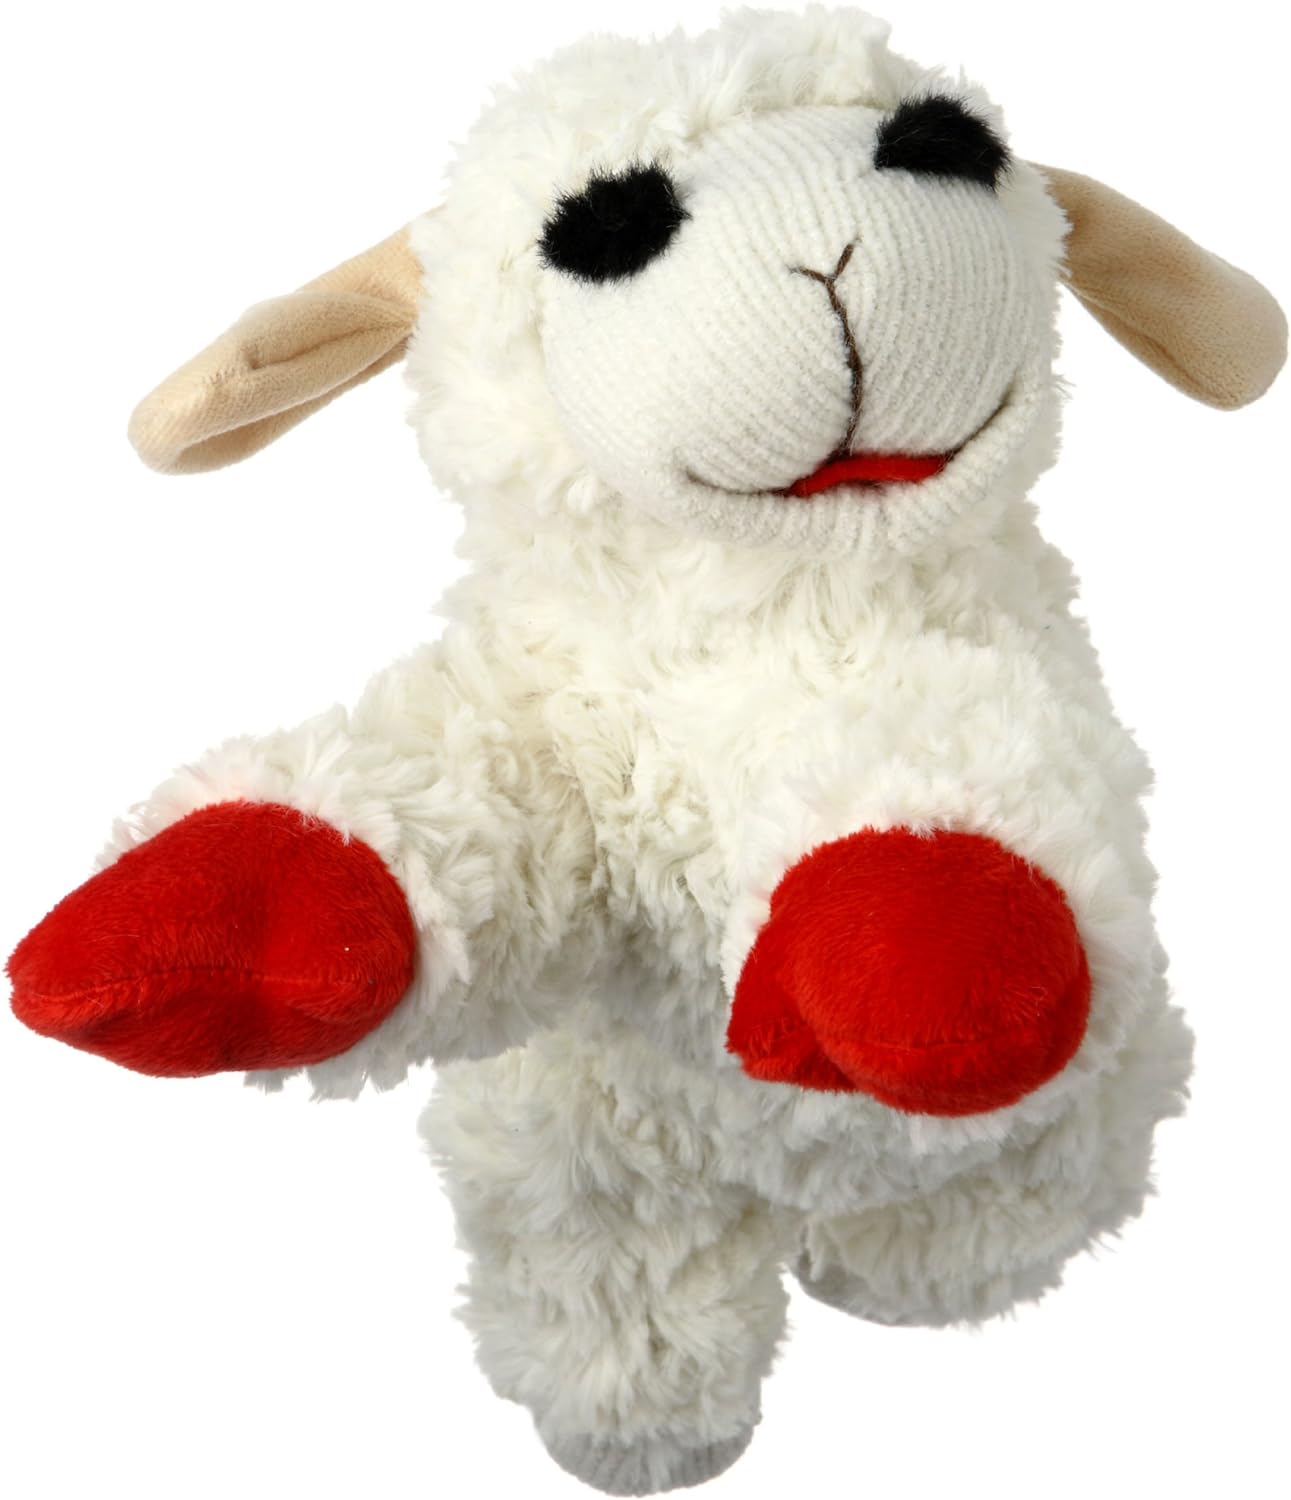 Plush Dog Toy, Lambchop, 10", White/Tan, Small